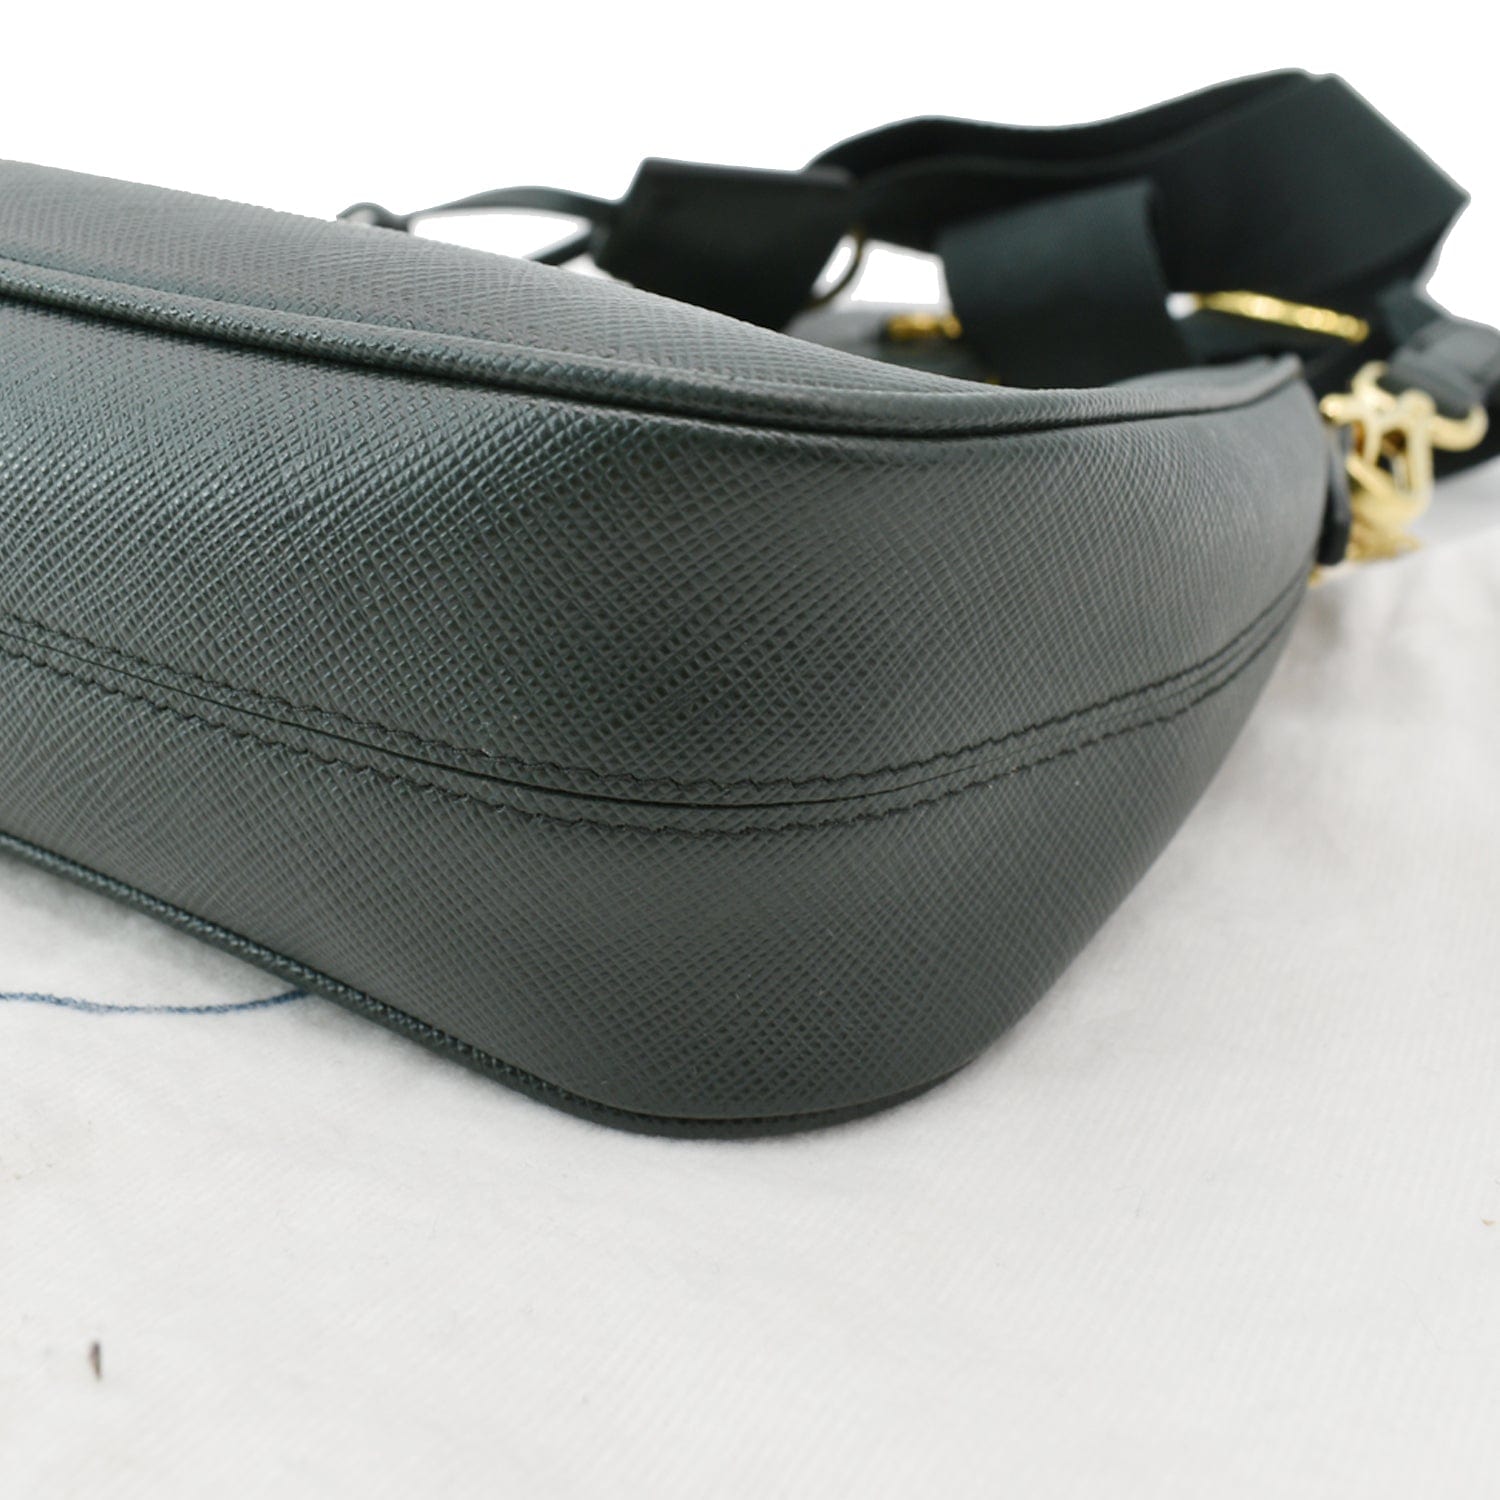 Prada Re-Edition 2005 Saffiano Leather Bag - Citron Green – Amuze